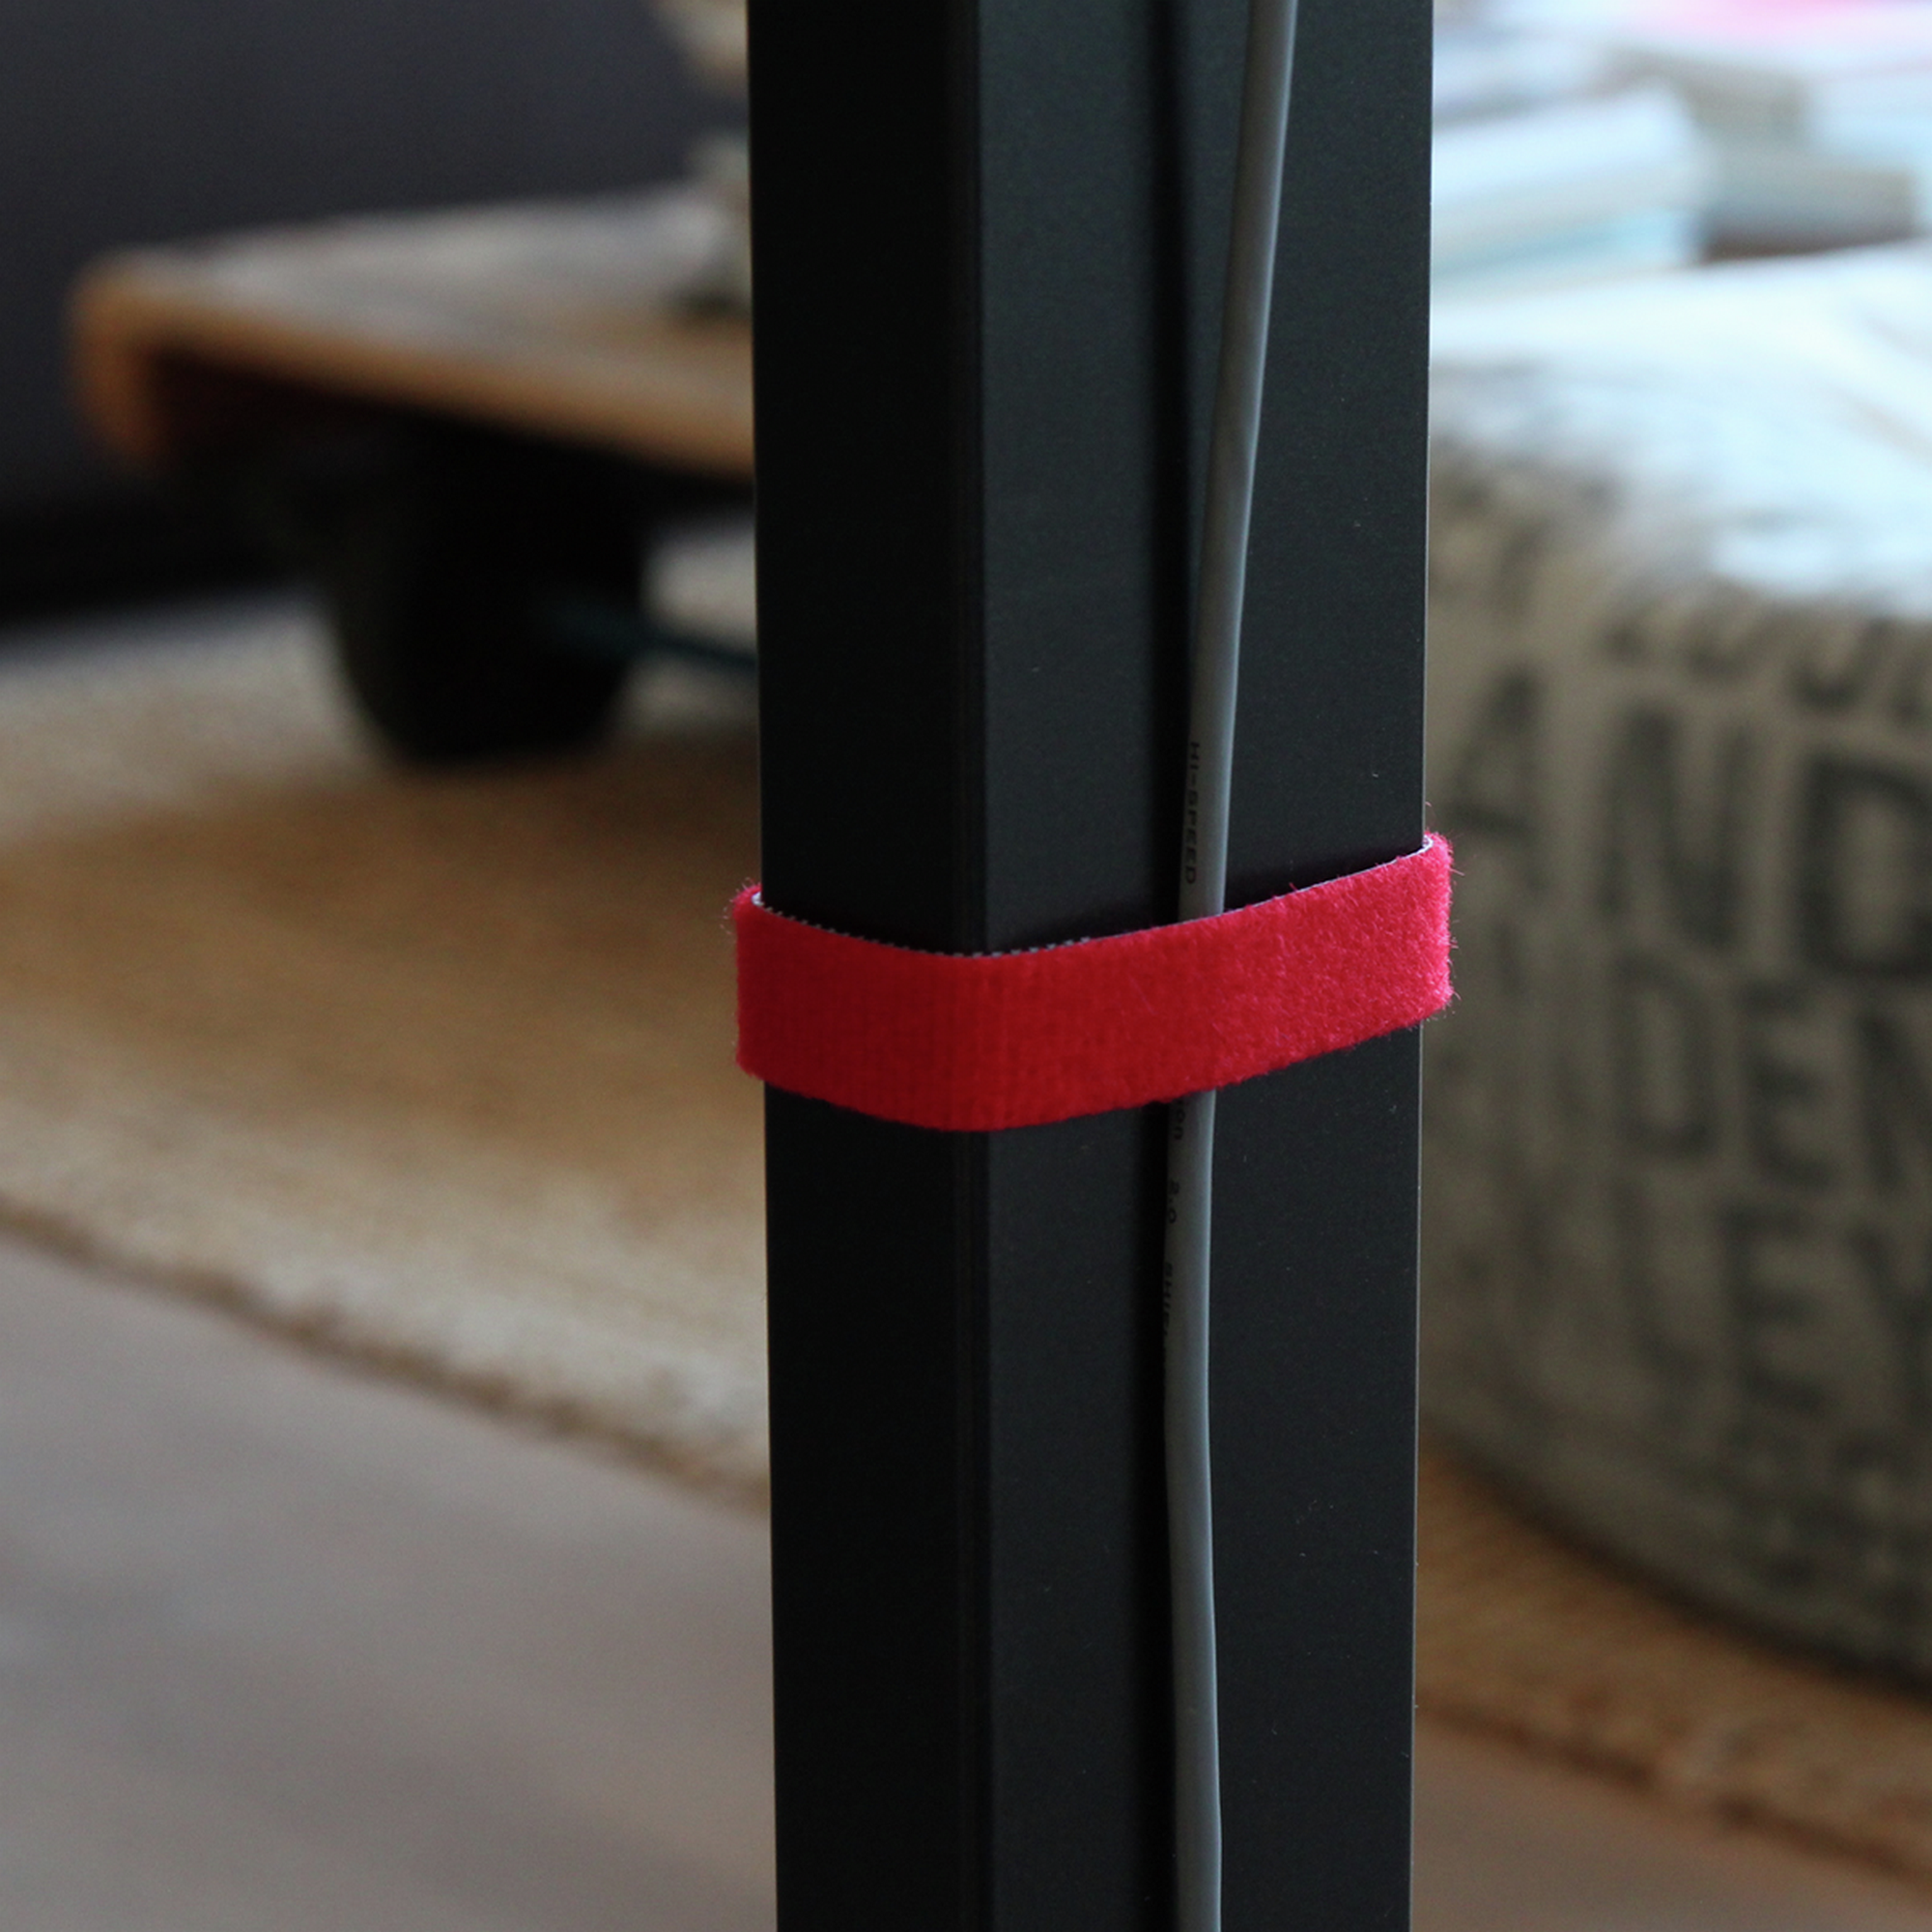 Doppelseitige Klettbandrolle 'LTC Roll Straps' mehrfarbig 16 mm x 1 m 4 Stück + product picture